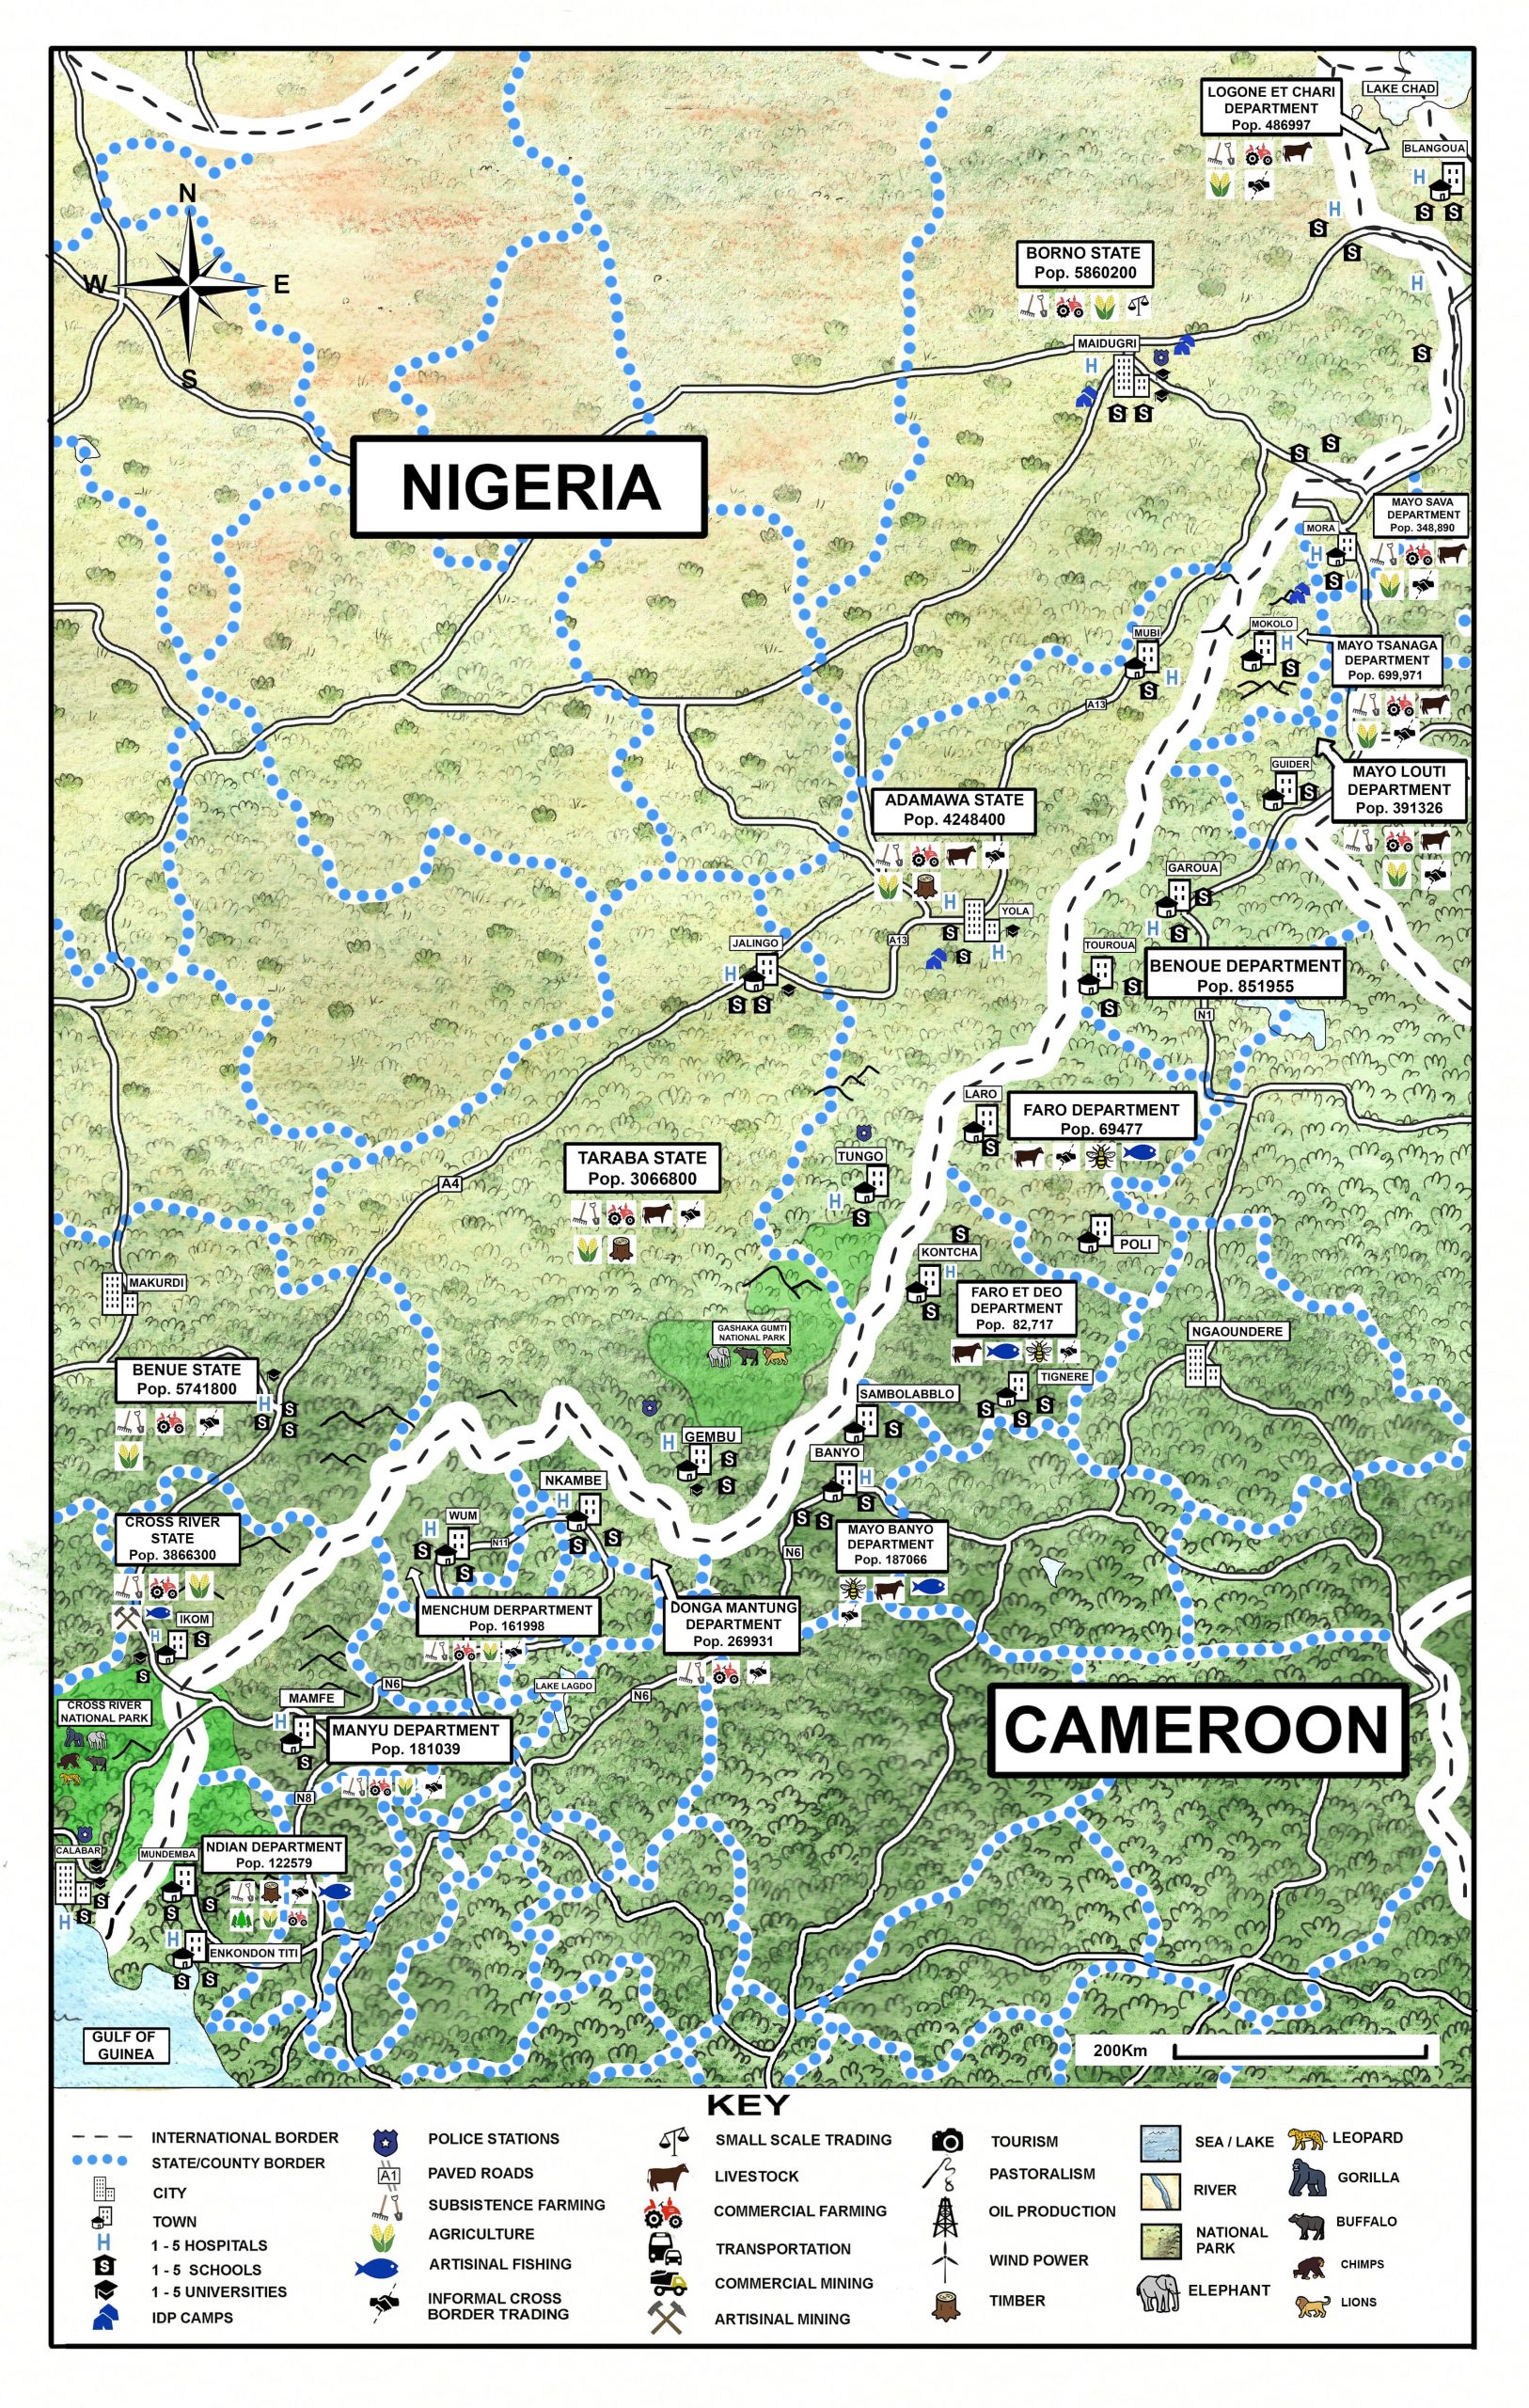 CAMEROON - NIGERIA_illustration